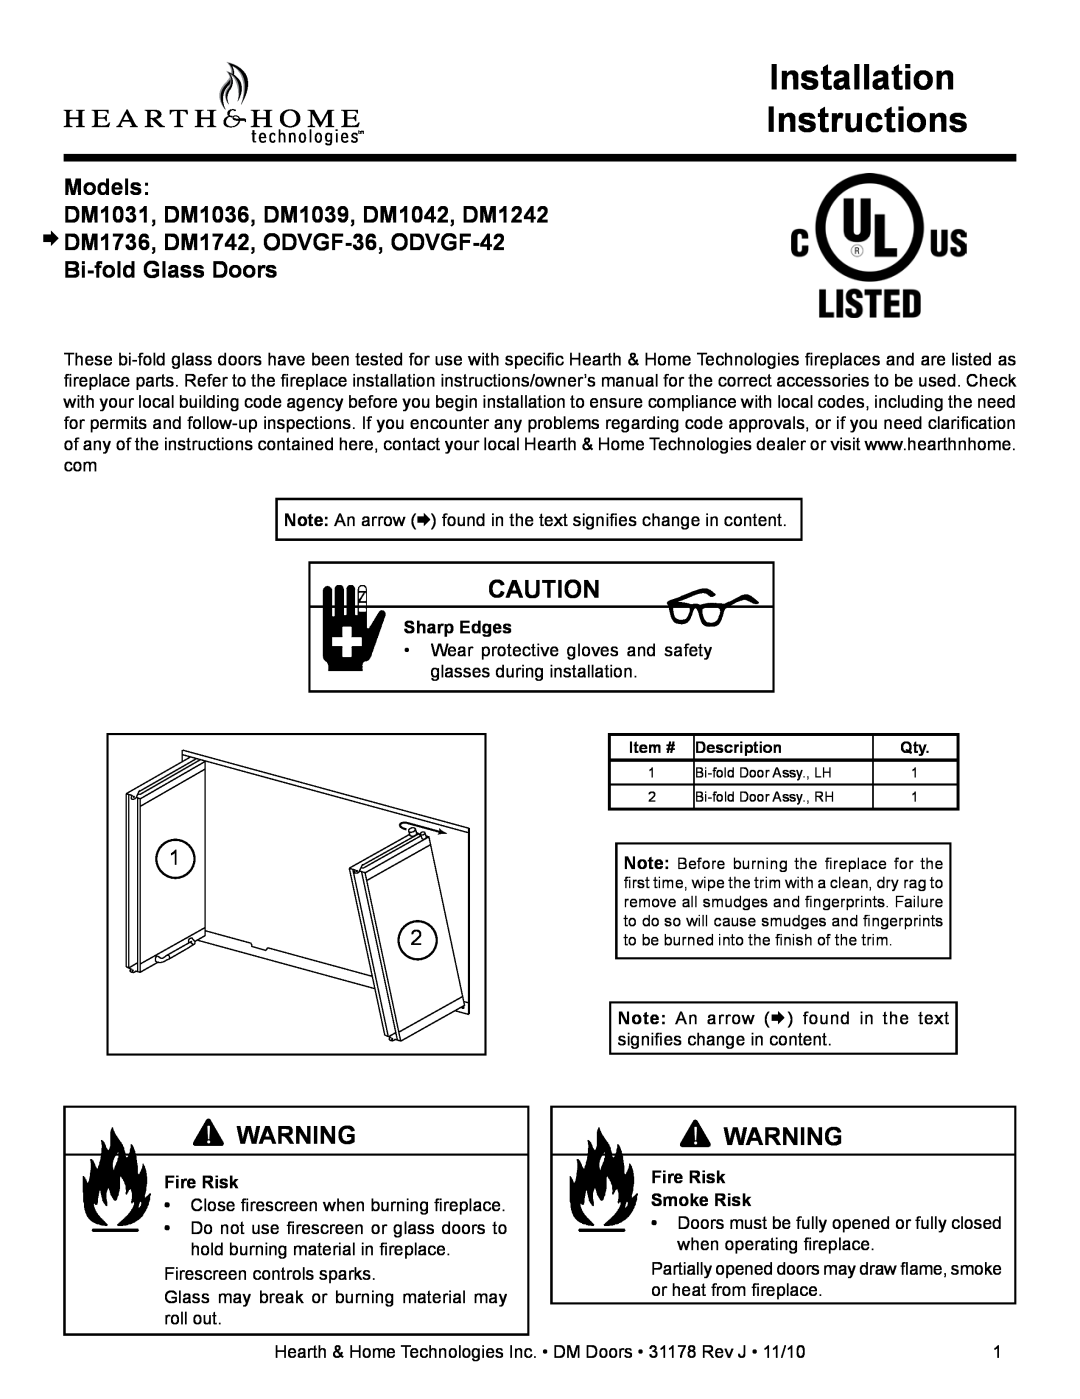 Hearth and Home Technologies DM1736, ODVGF-42 installation instructions Installation Instructions, Sharp Edges, Fire Risk 